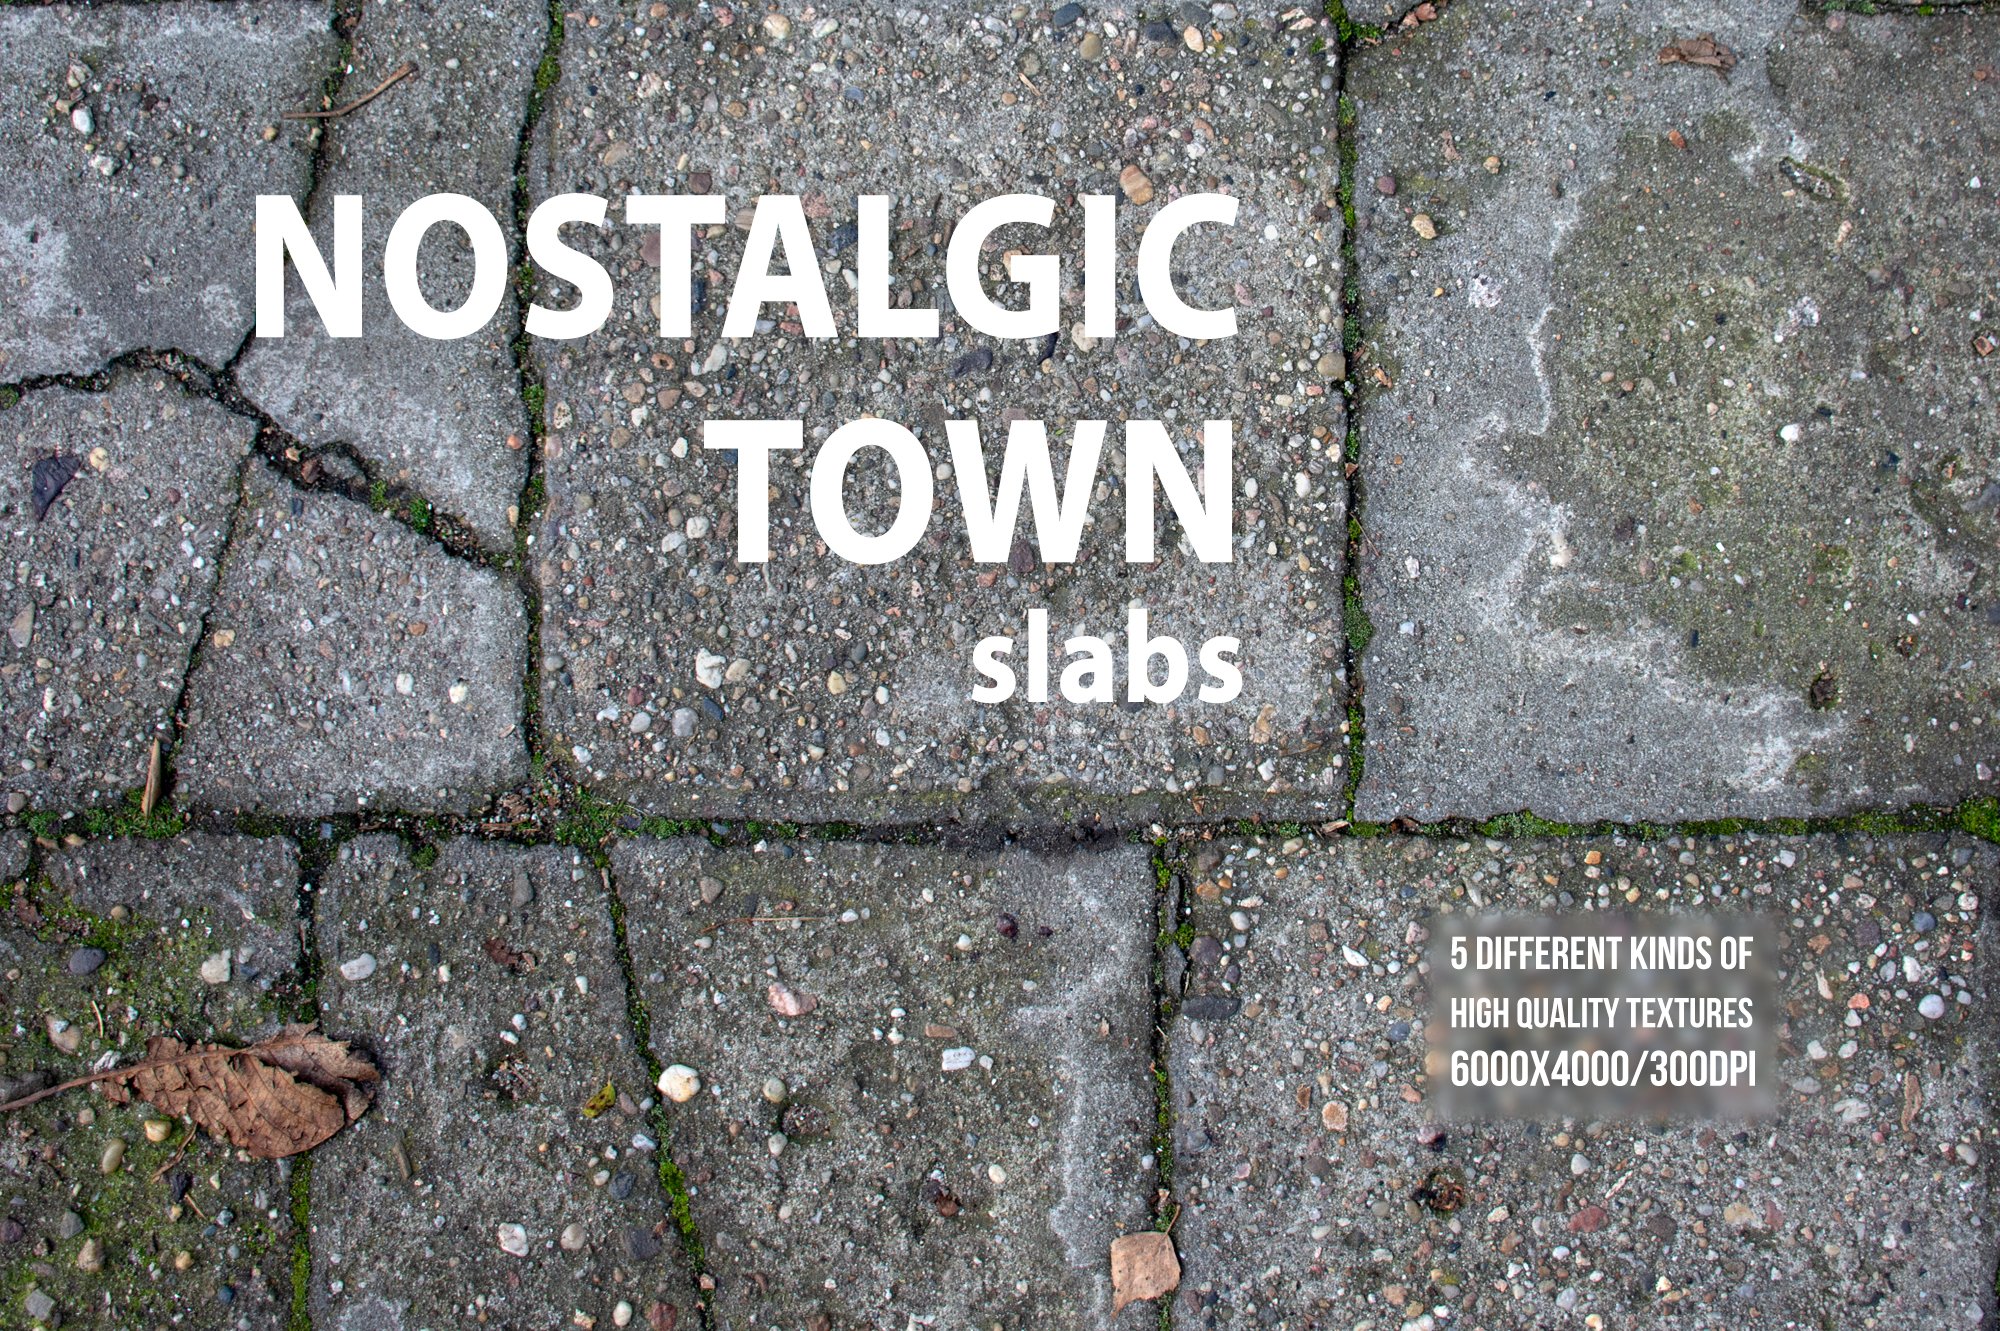 Nostalgic Town: Slabs cover image.